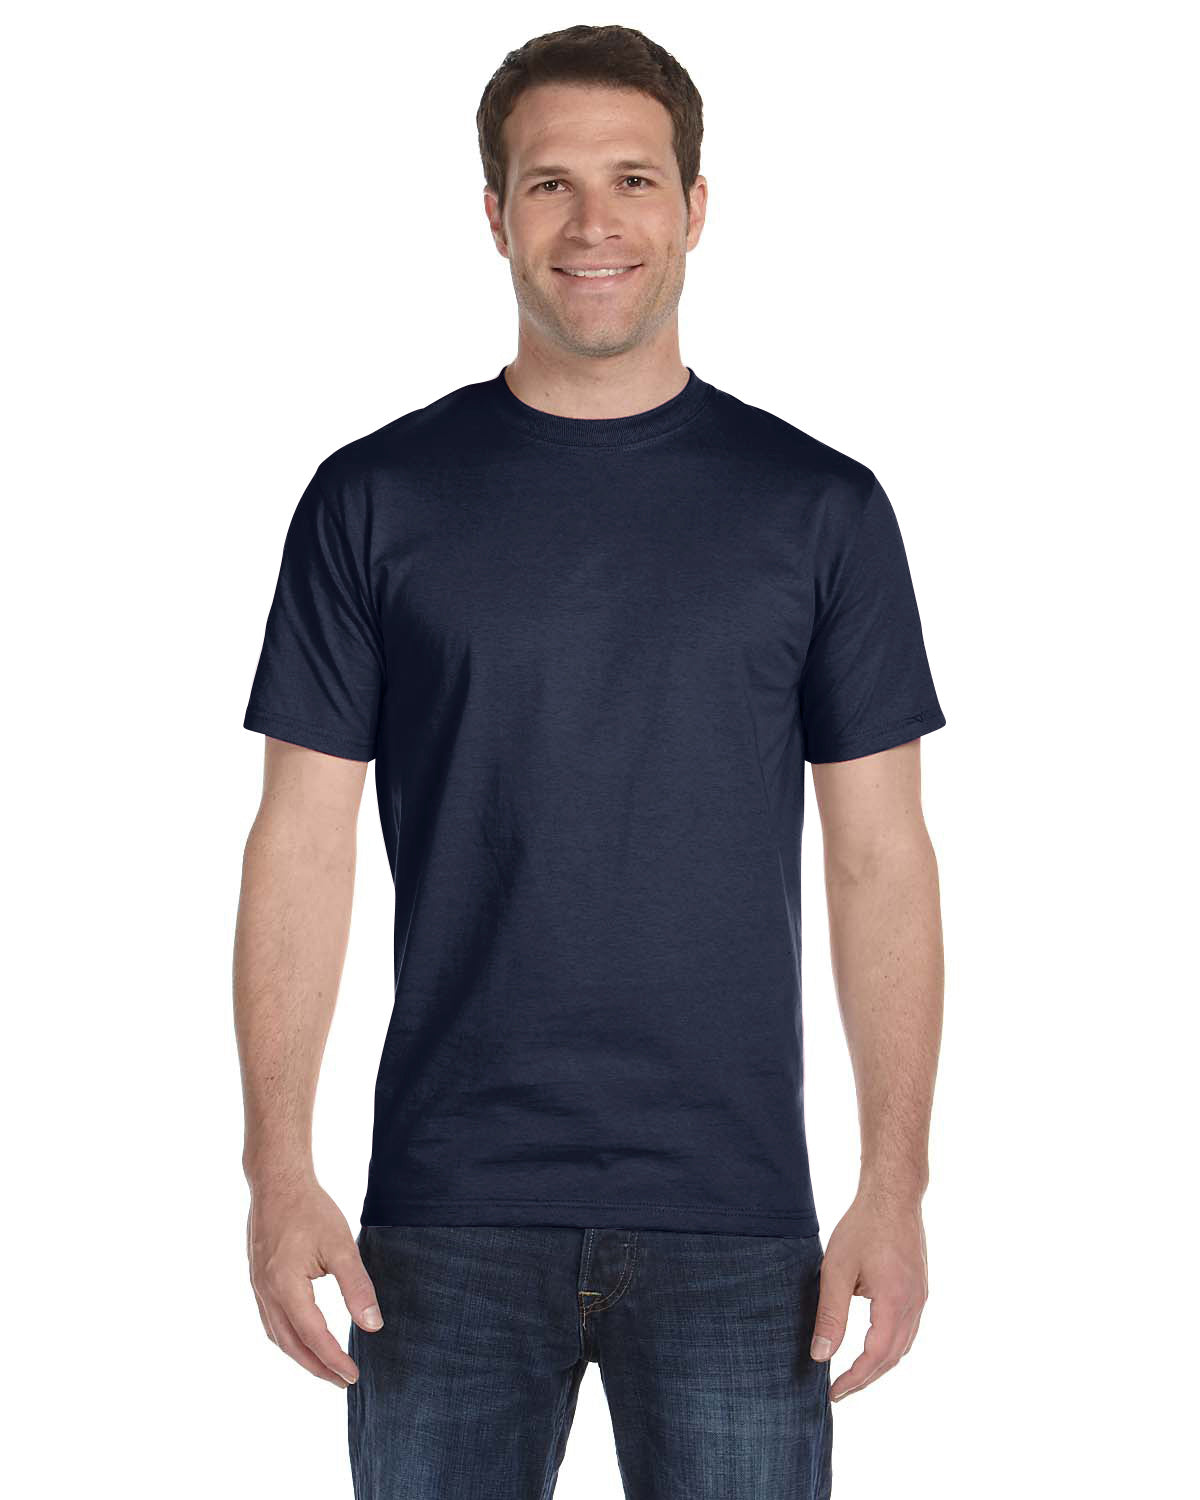 50/50 – The COLORS T-Shirt HTV Store Gildan BASIC Dryblend Adult